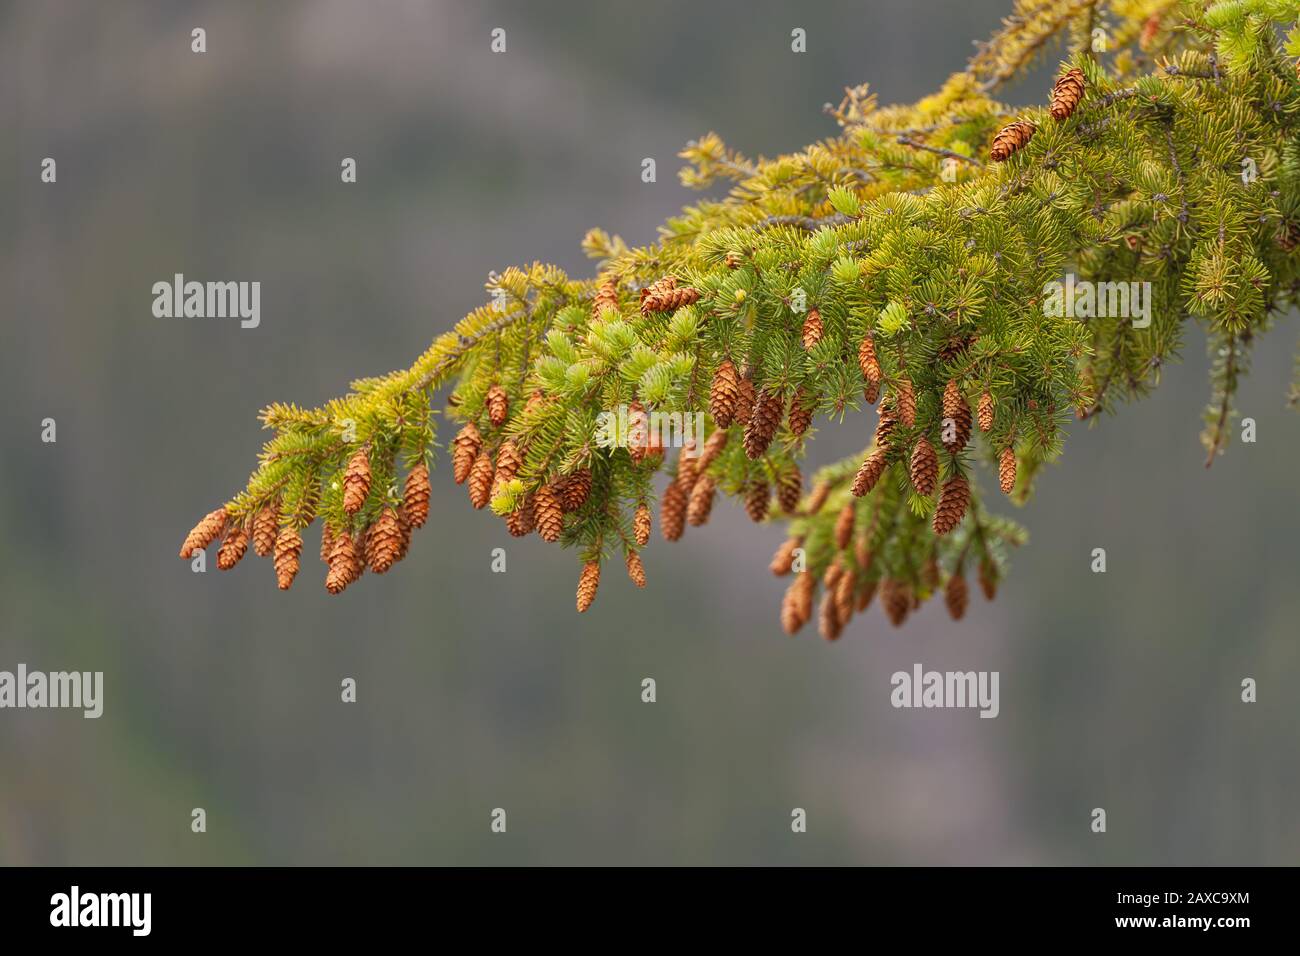 Engelmann Spruce, Picea engelmannii, with cones, Banff National Park, Alberta, Canada. Stock Photo